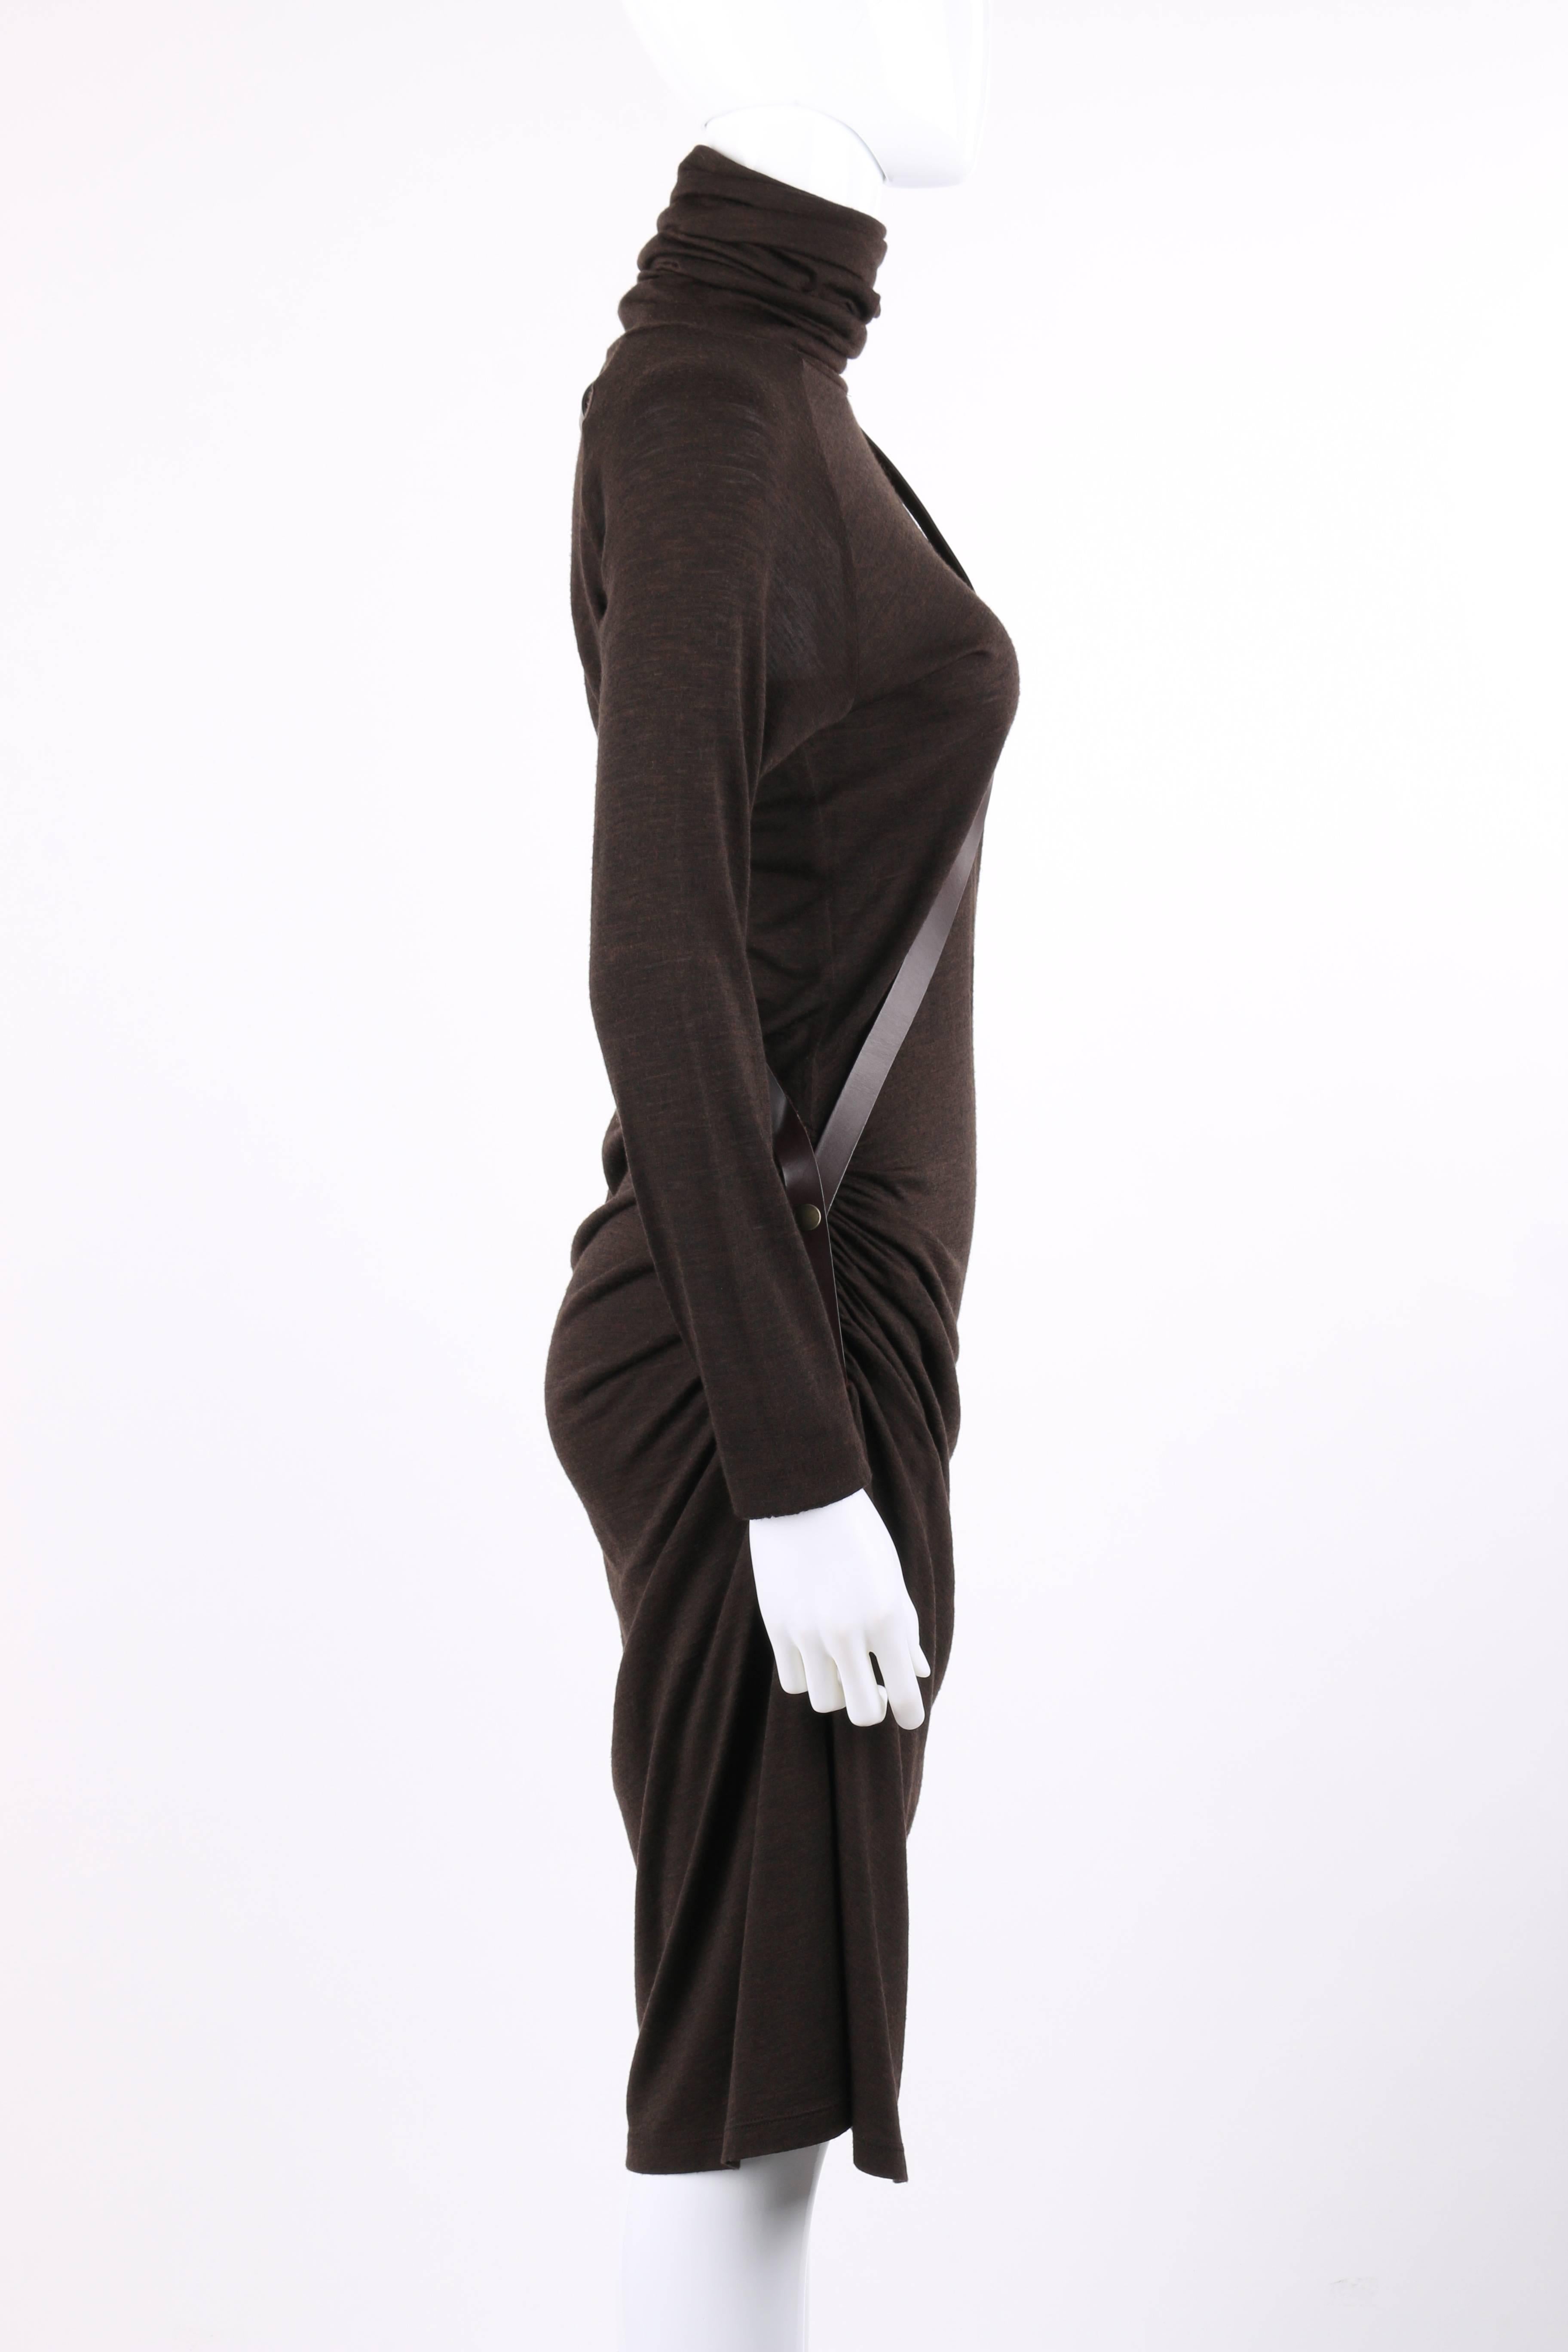 Black JEAN PAUL GAULTIER Classique S/S 2007 Wool Knit Crossbody Belted Cocktail Dress For Sale